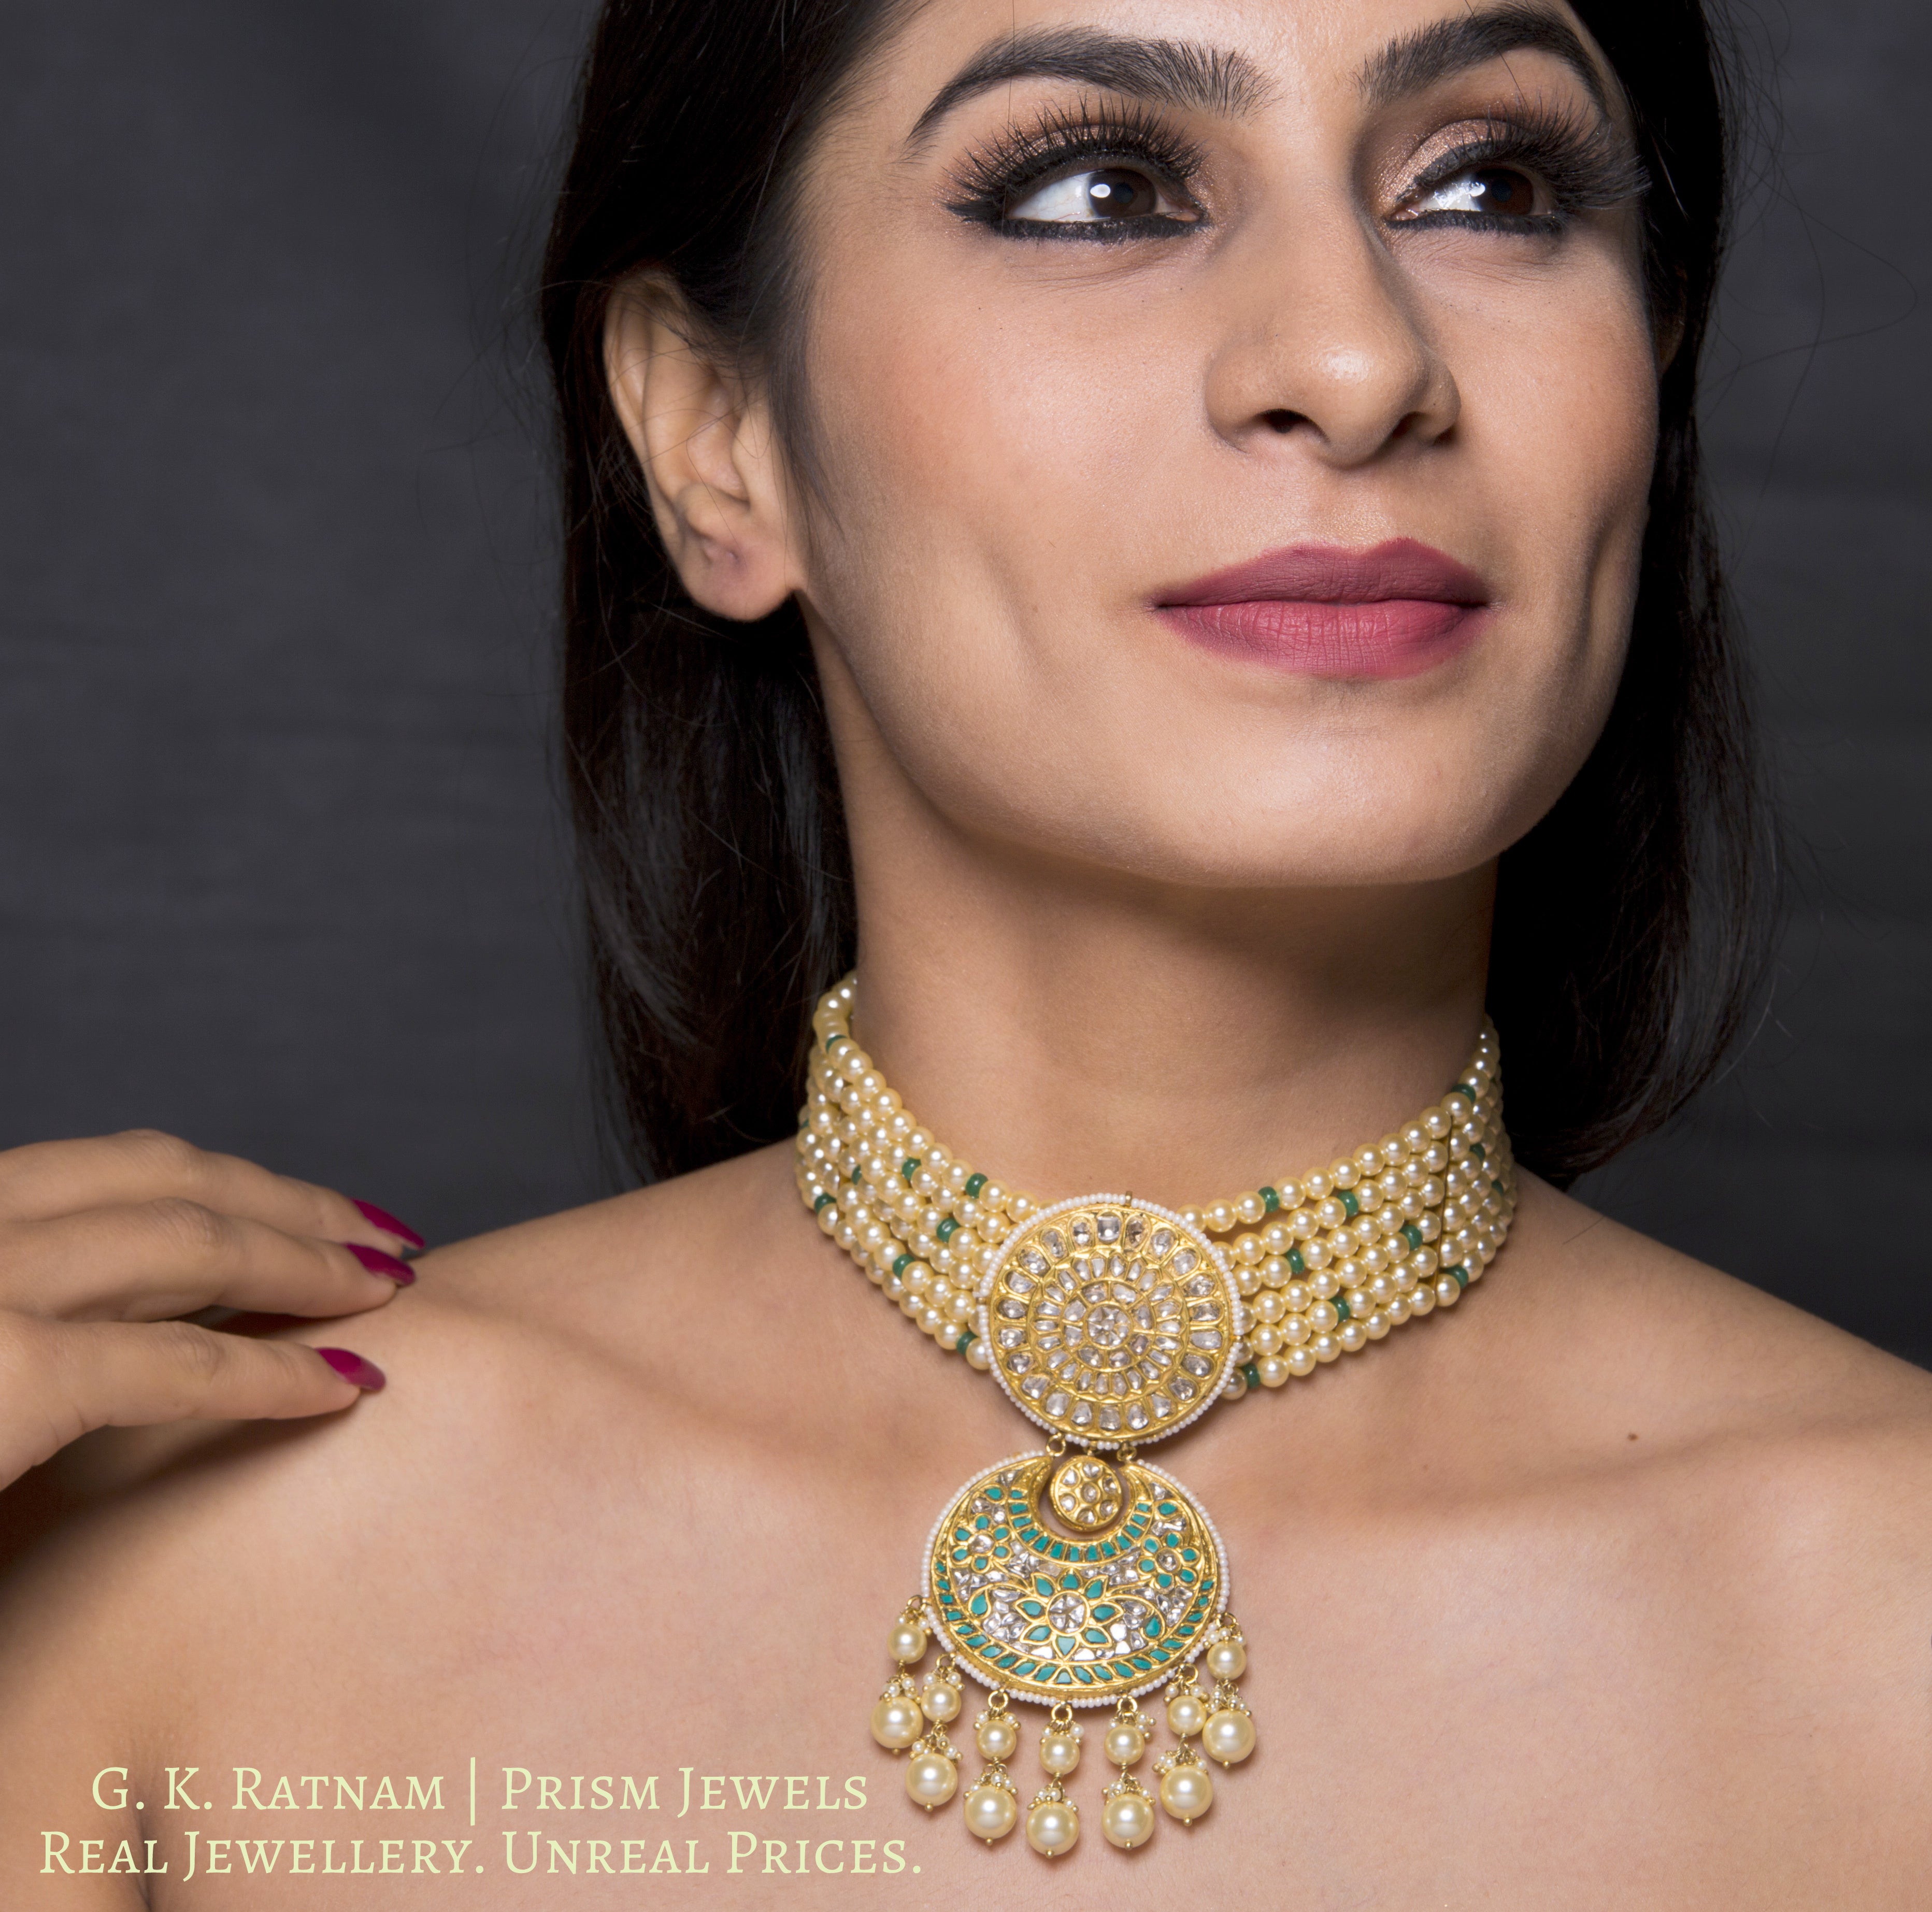 23k Gold and Diamond Polki Turquoise Choker Necklace Set delicately strung in lustrous pearls - gold diamond polki kundan meena jadau jewellery